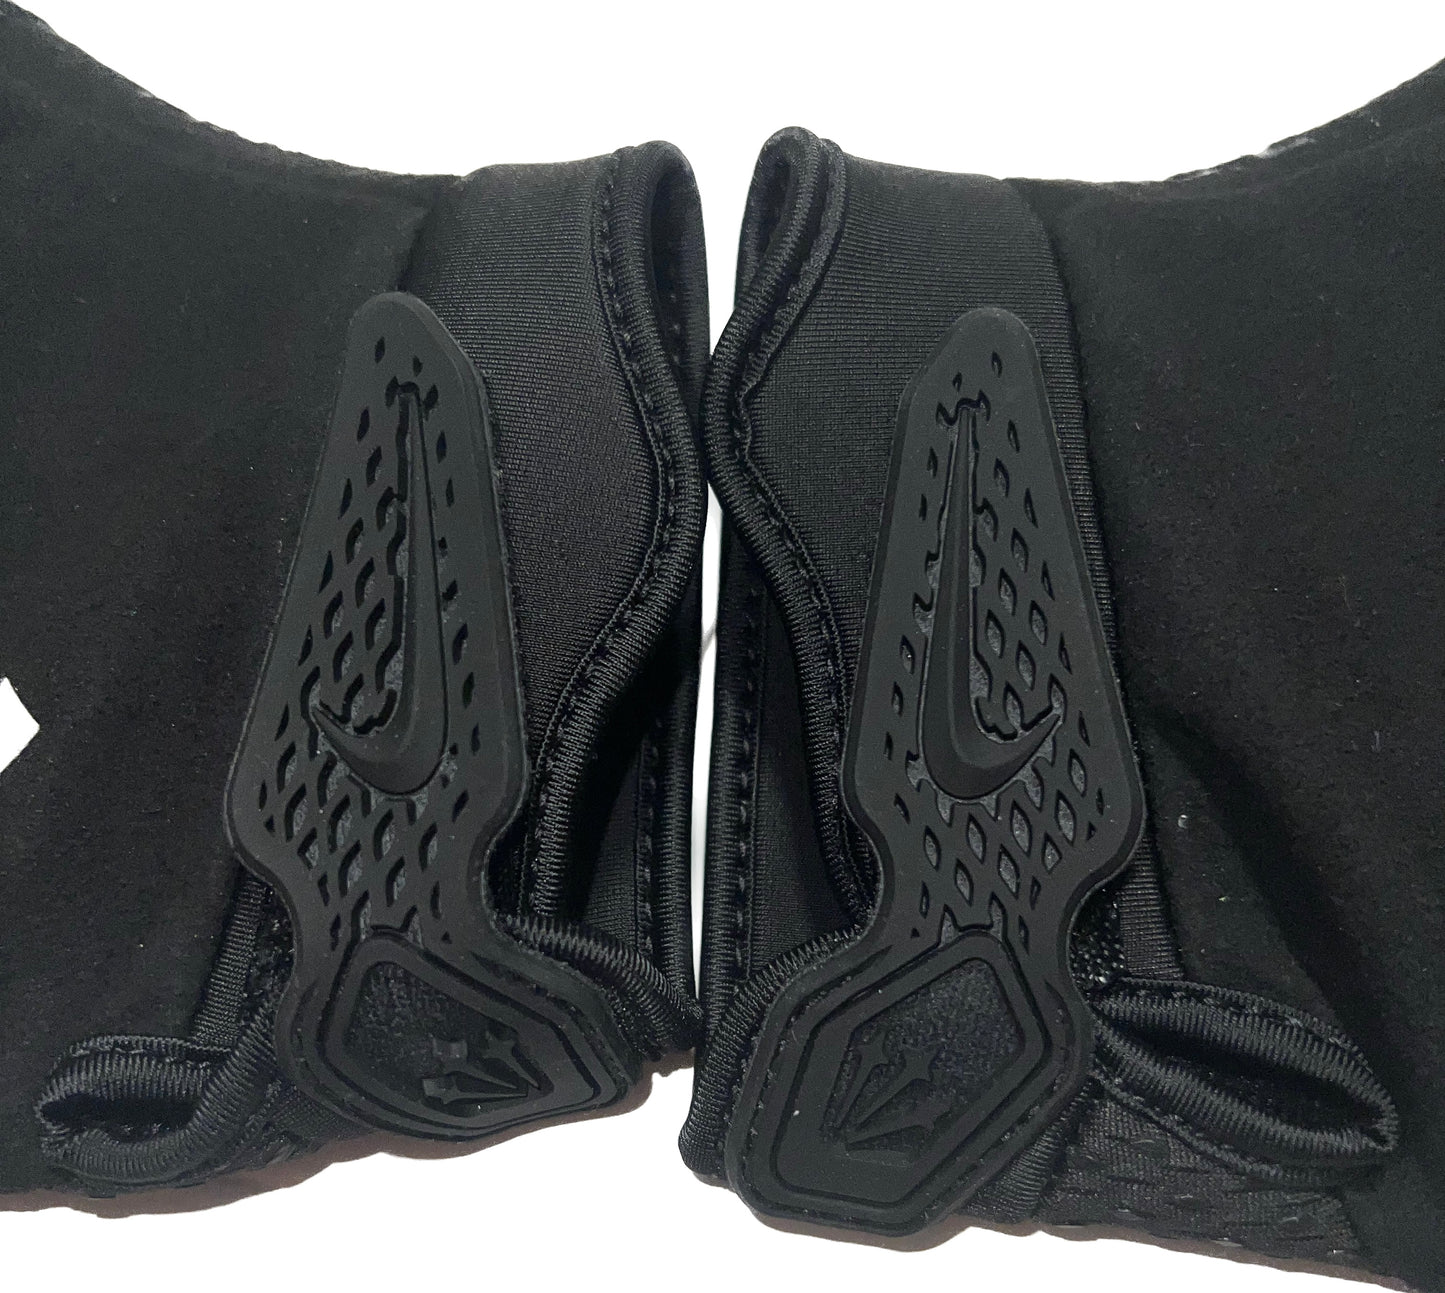 NOCTA Gloves